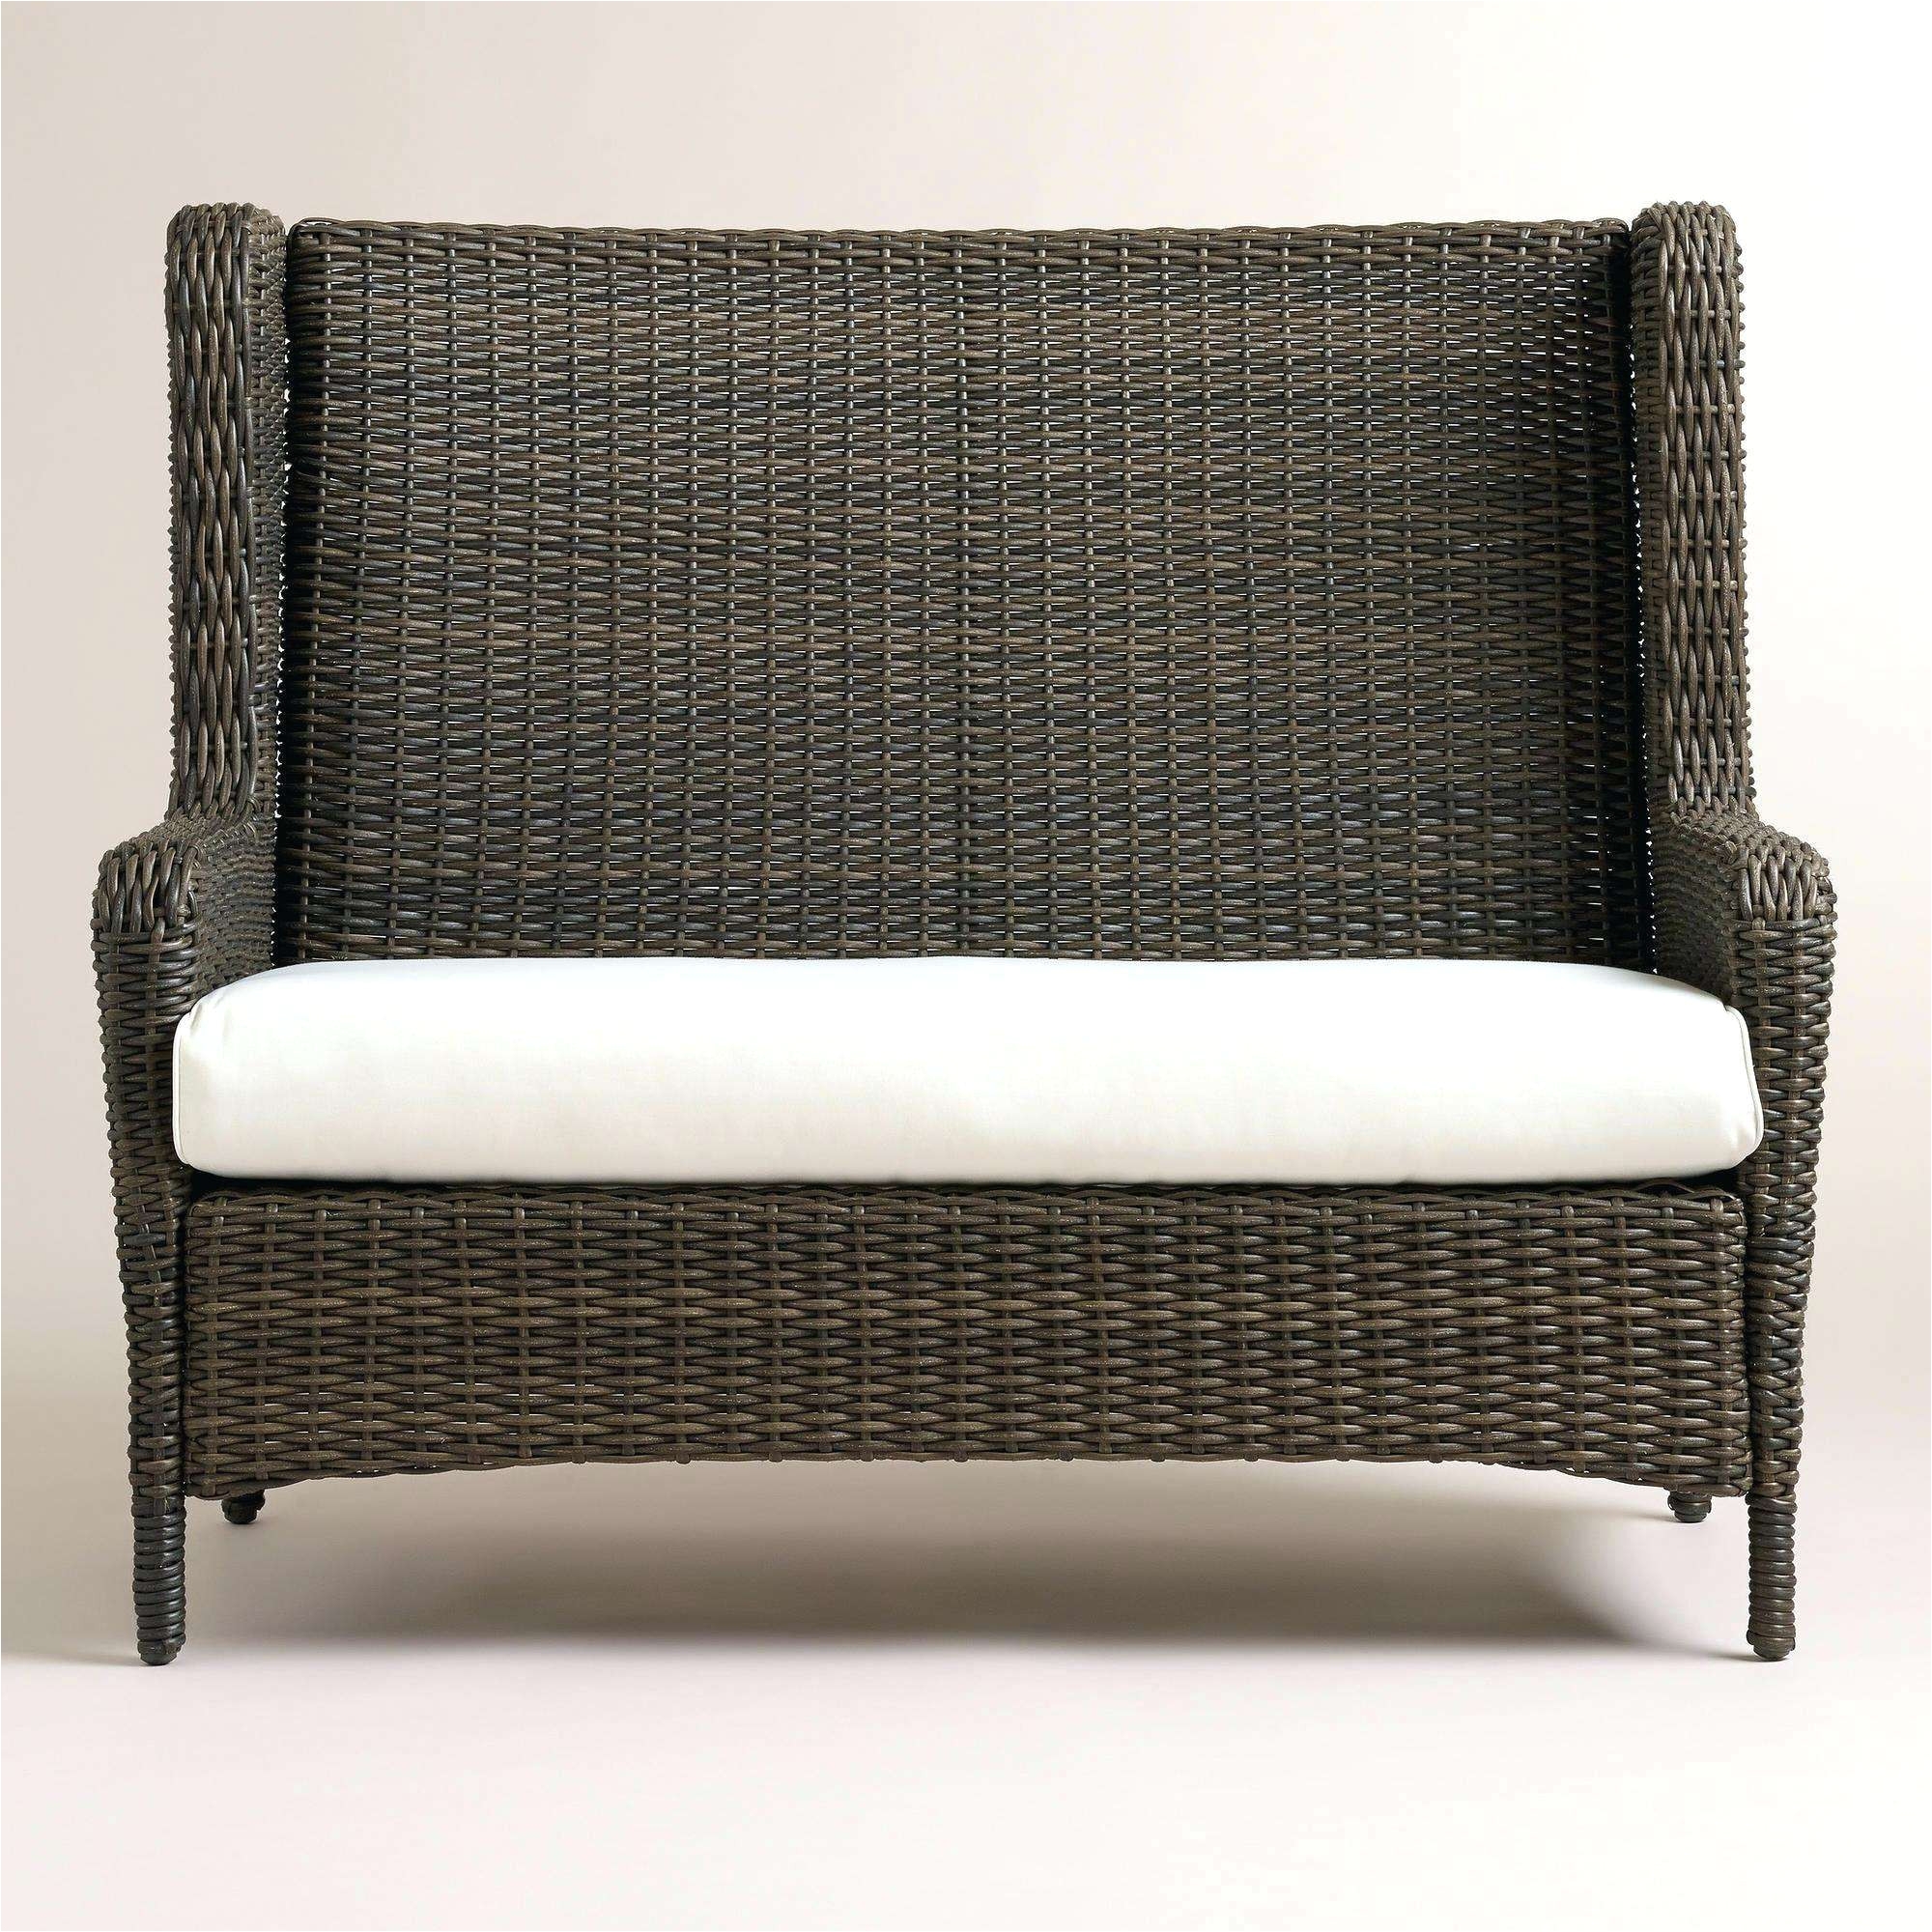 Kohls Outdoor Patio Chair Cushions 21 Luxury Kohls Chair Cushions Car Modification